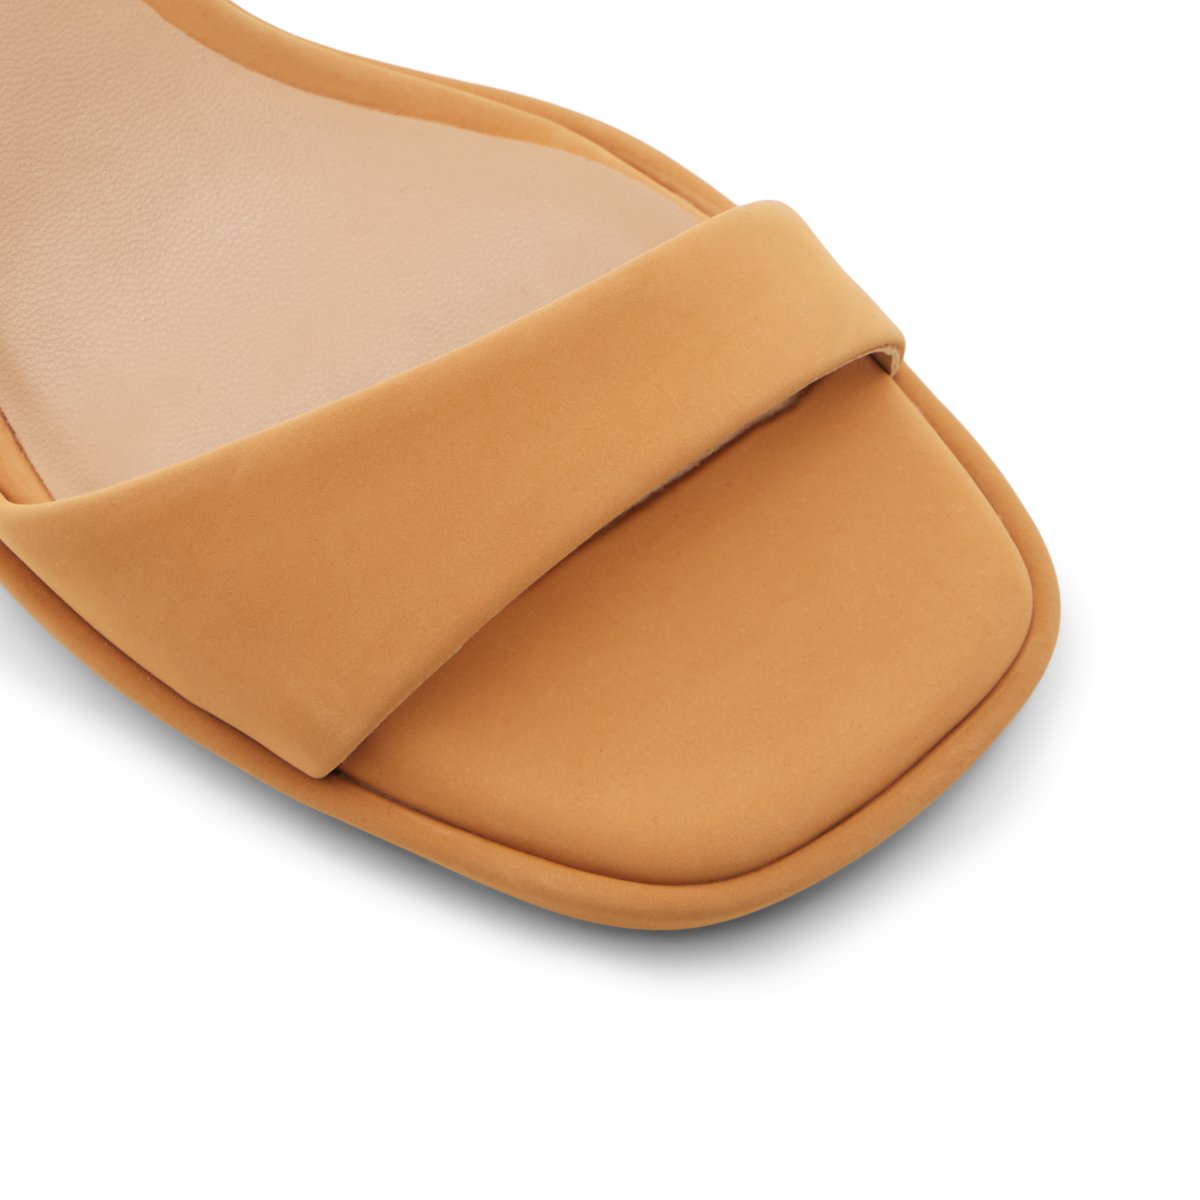 Beckie / Heeled Sandals Women Shoes - Dark Beige - CALL IT SPRING KSA